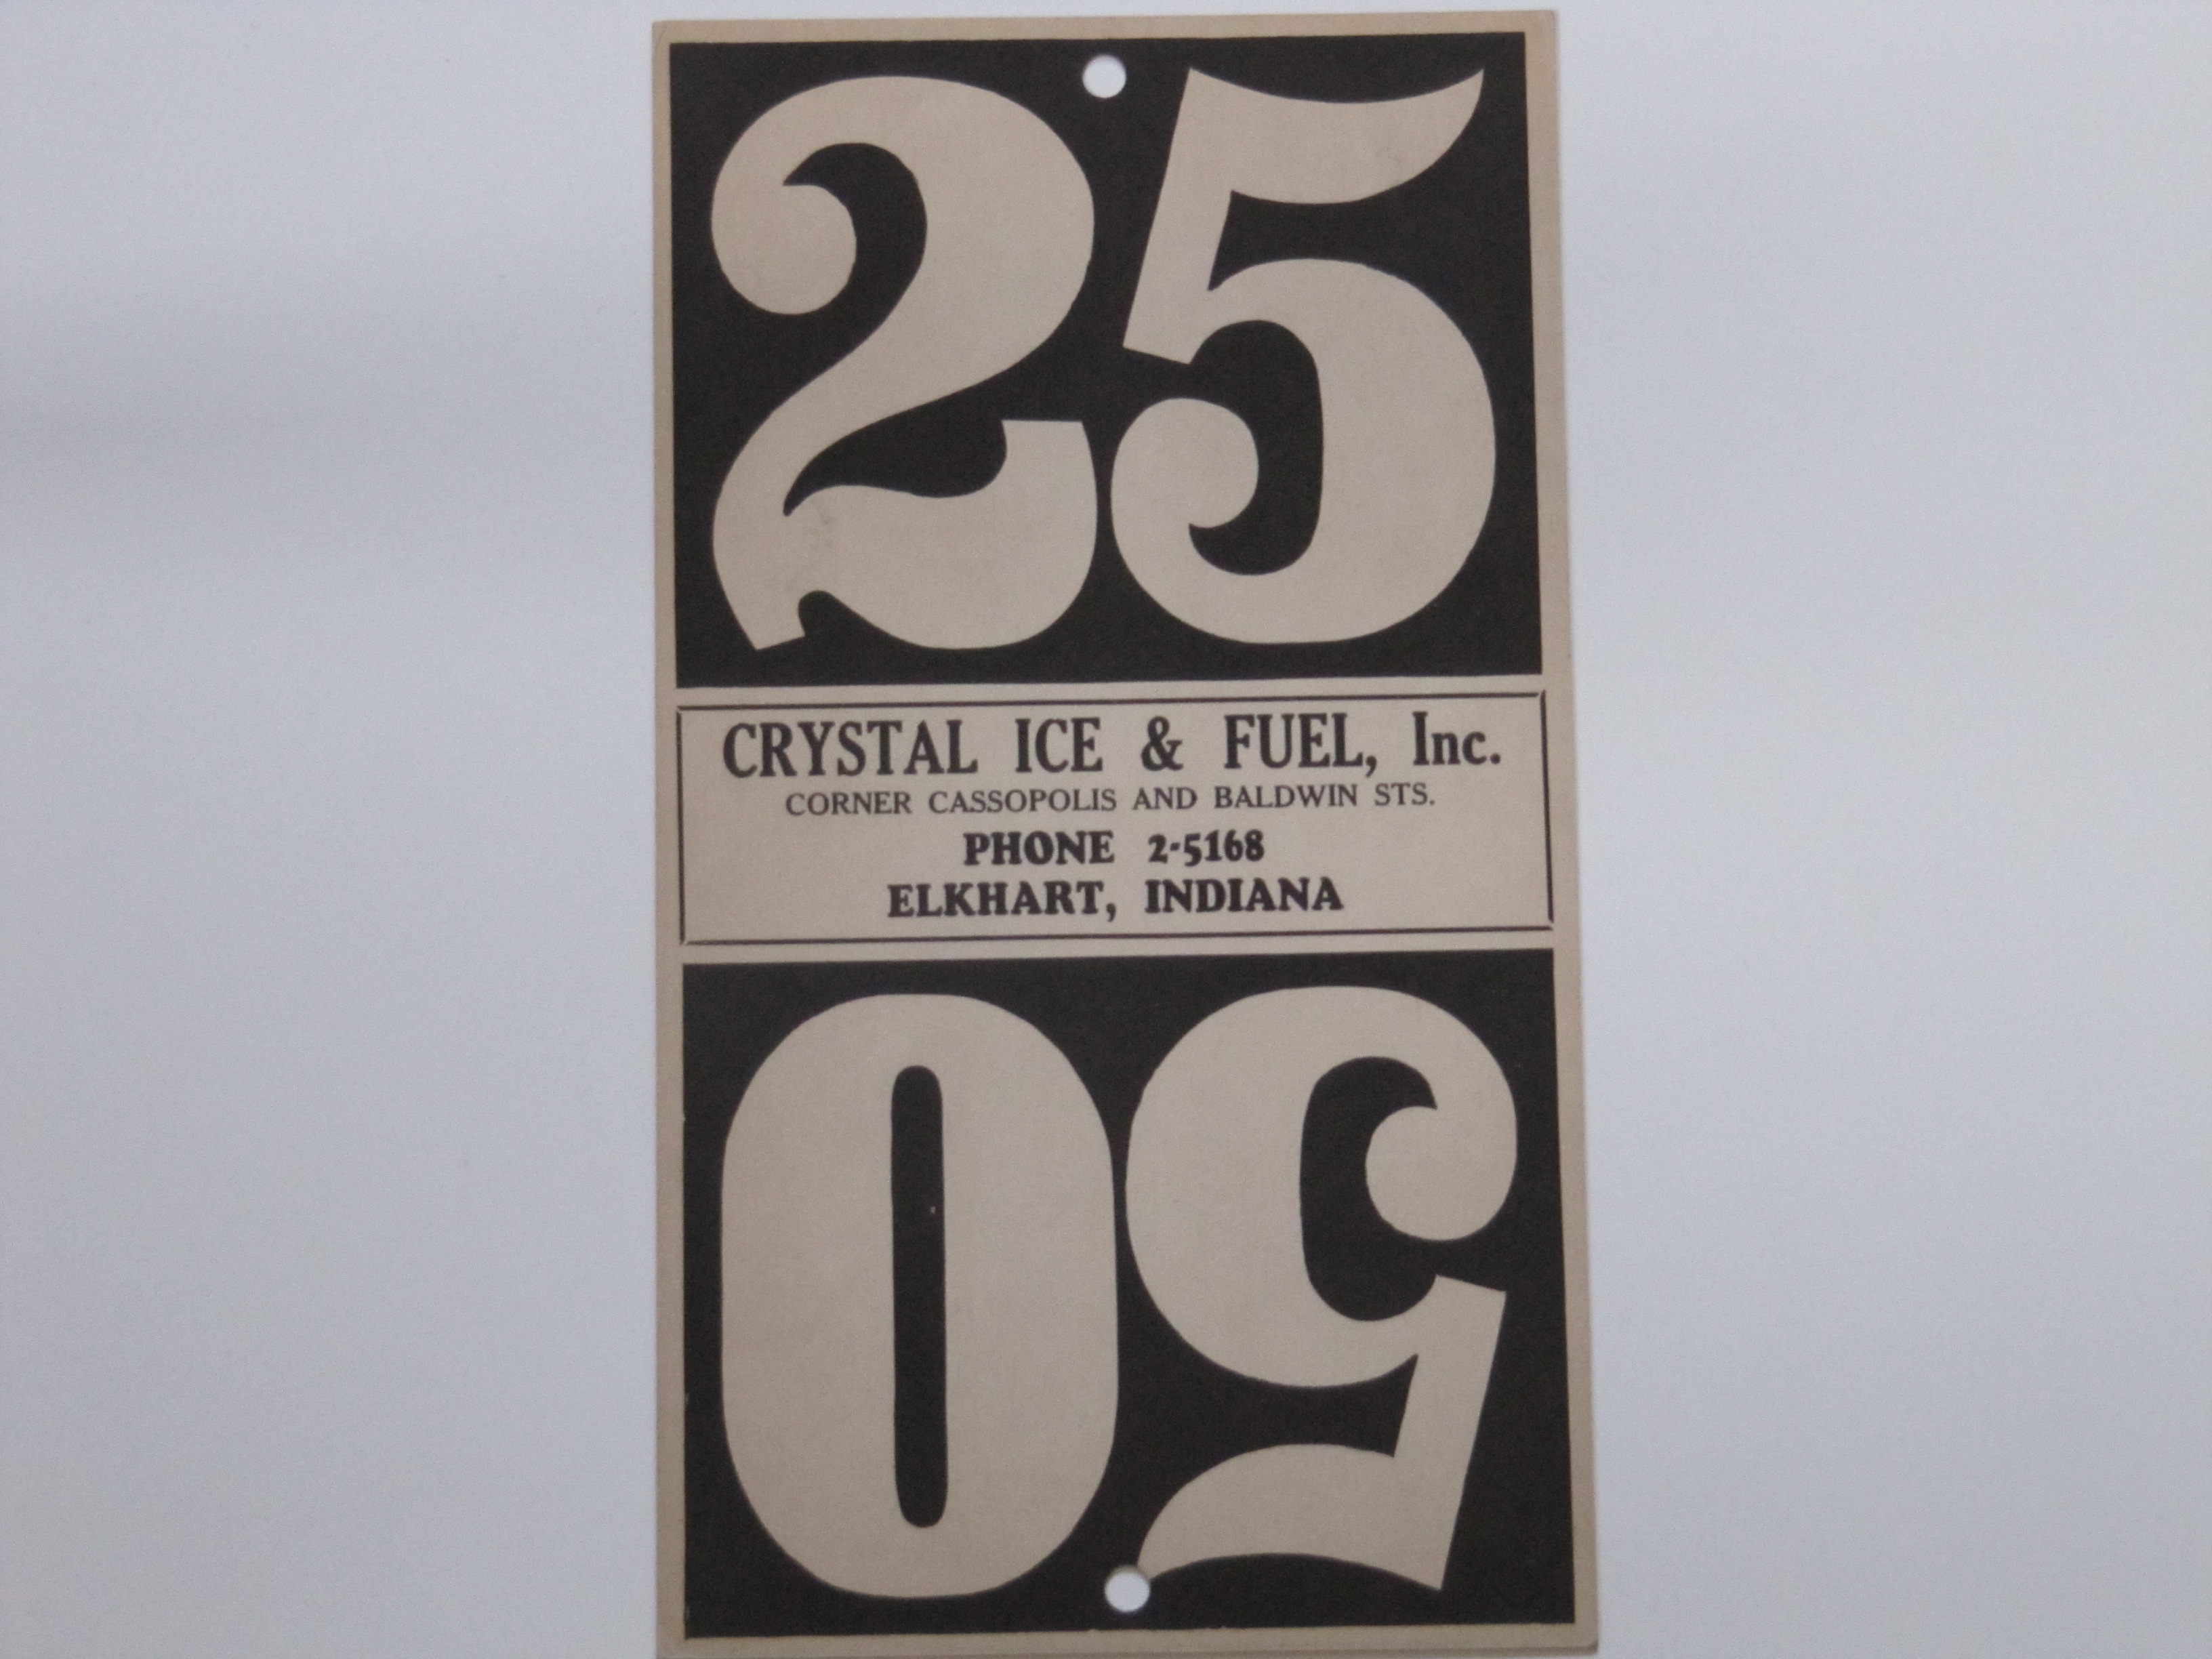 Crystal Ice & Fuel, Inc.